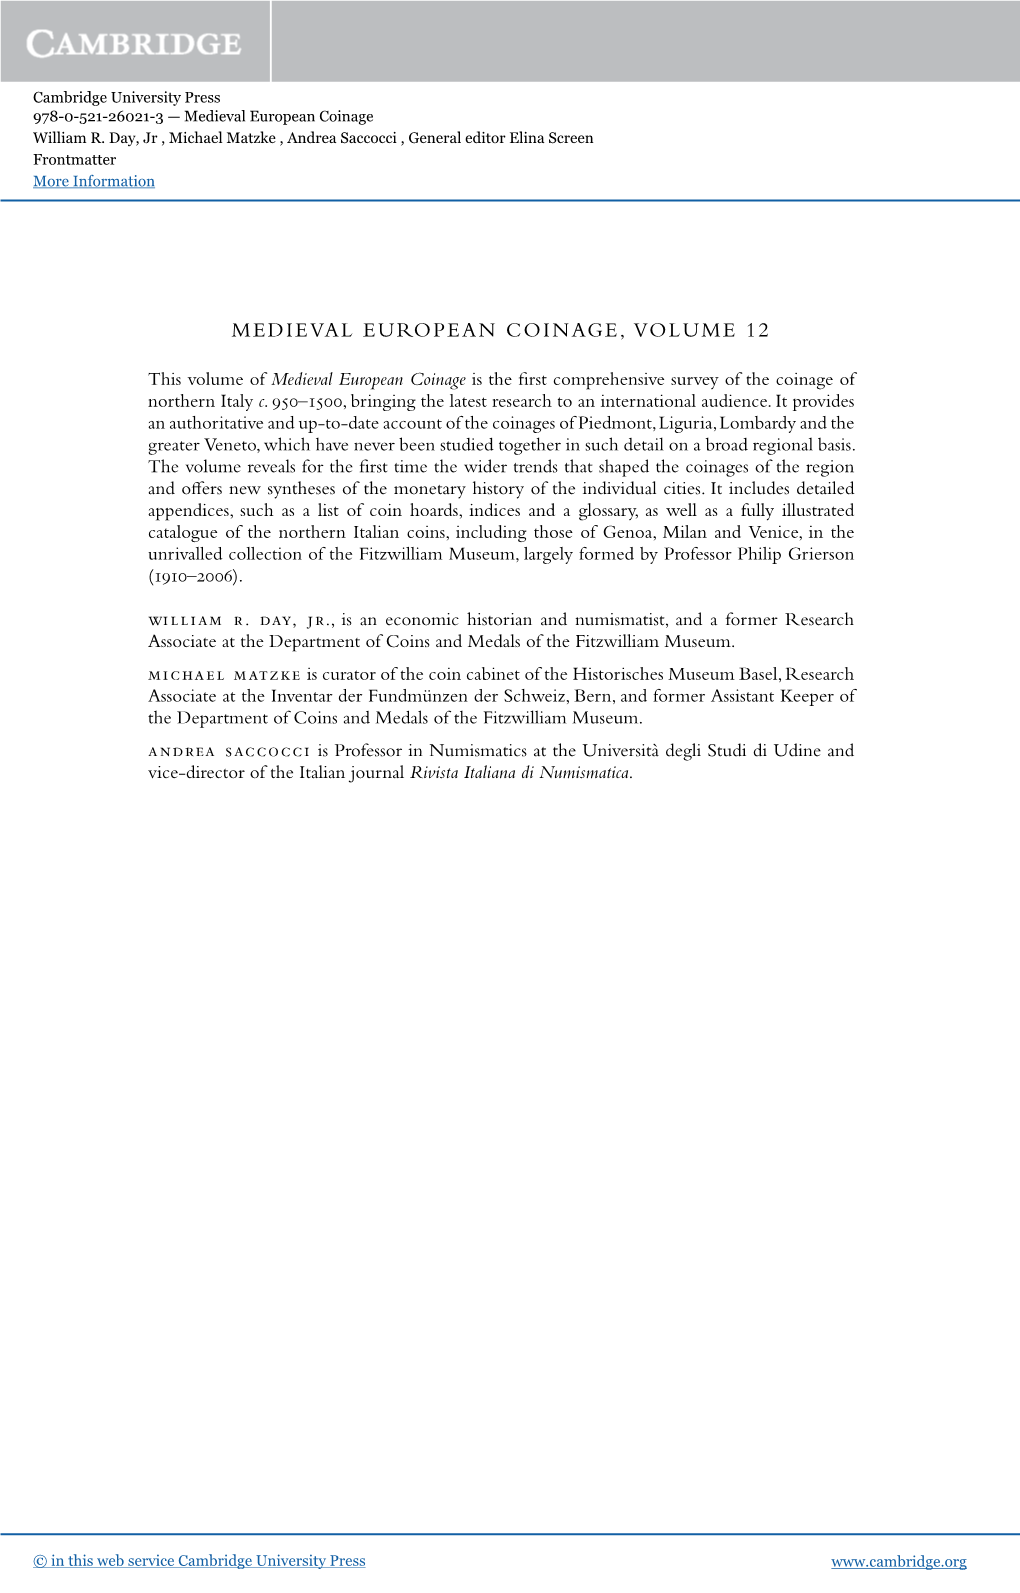 Medieval European Coinage, Volume 12